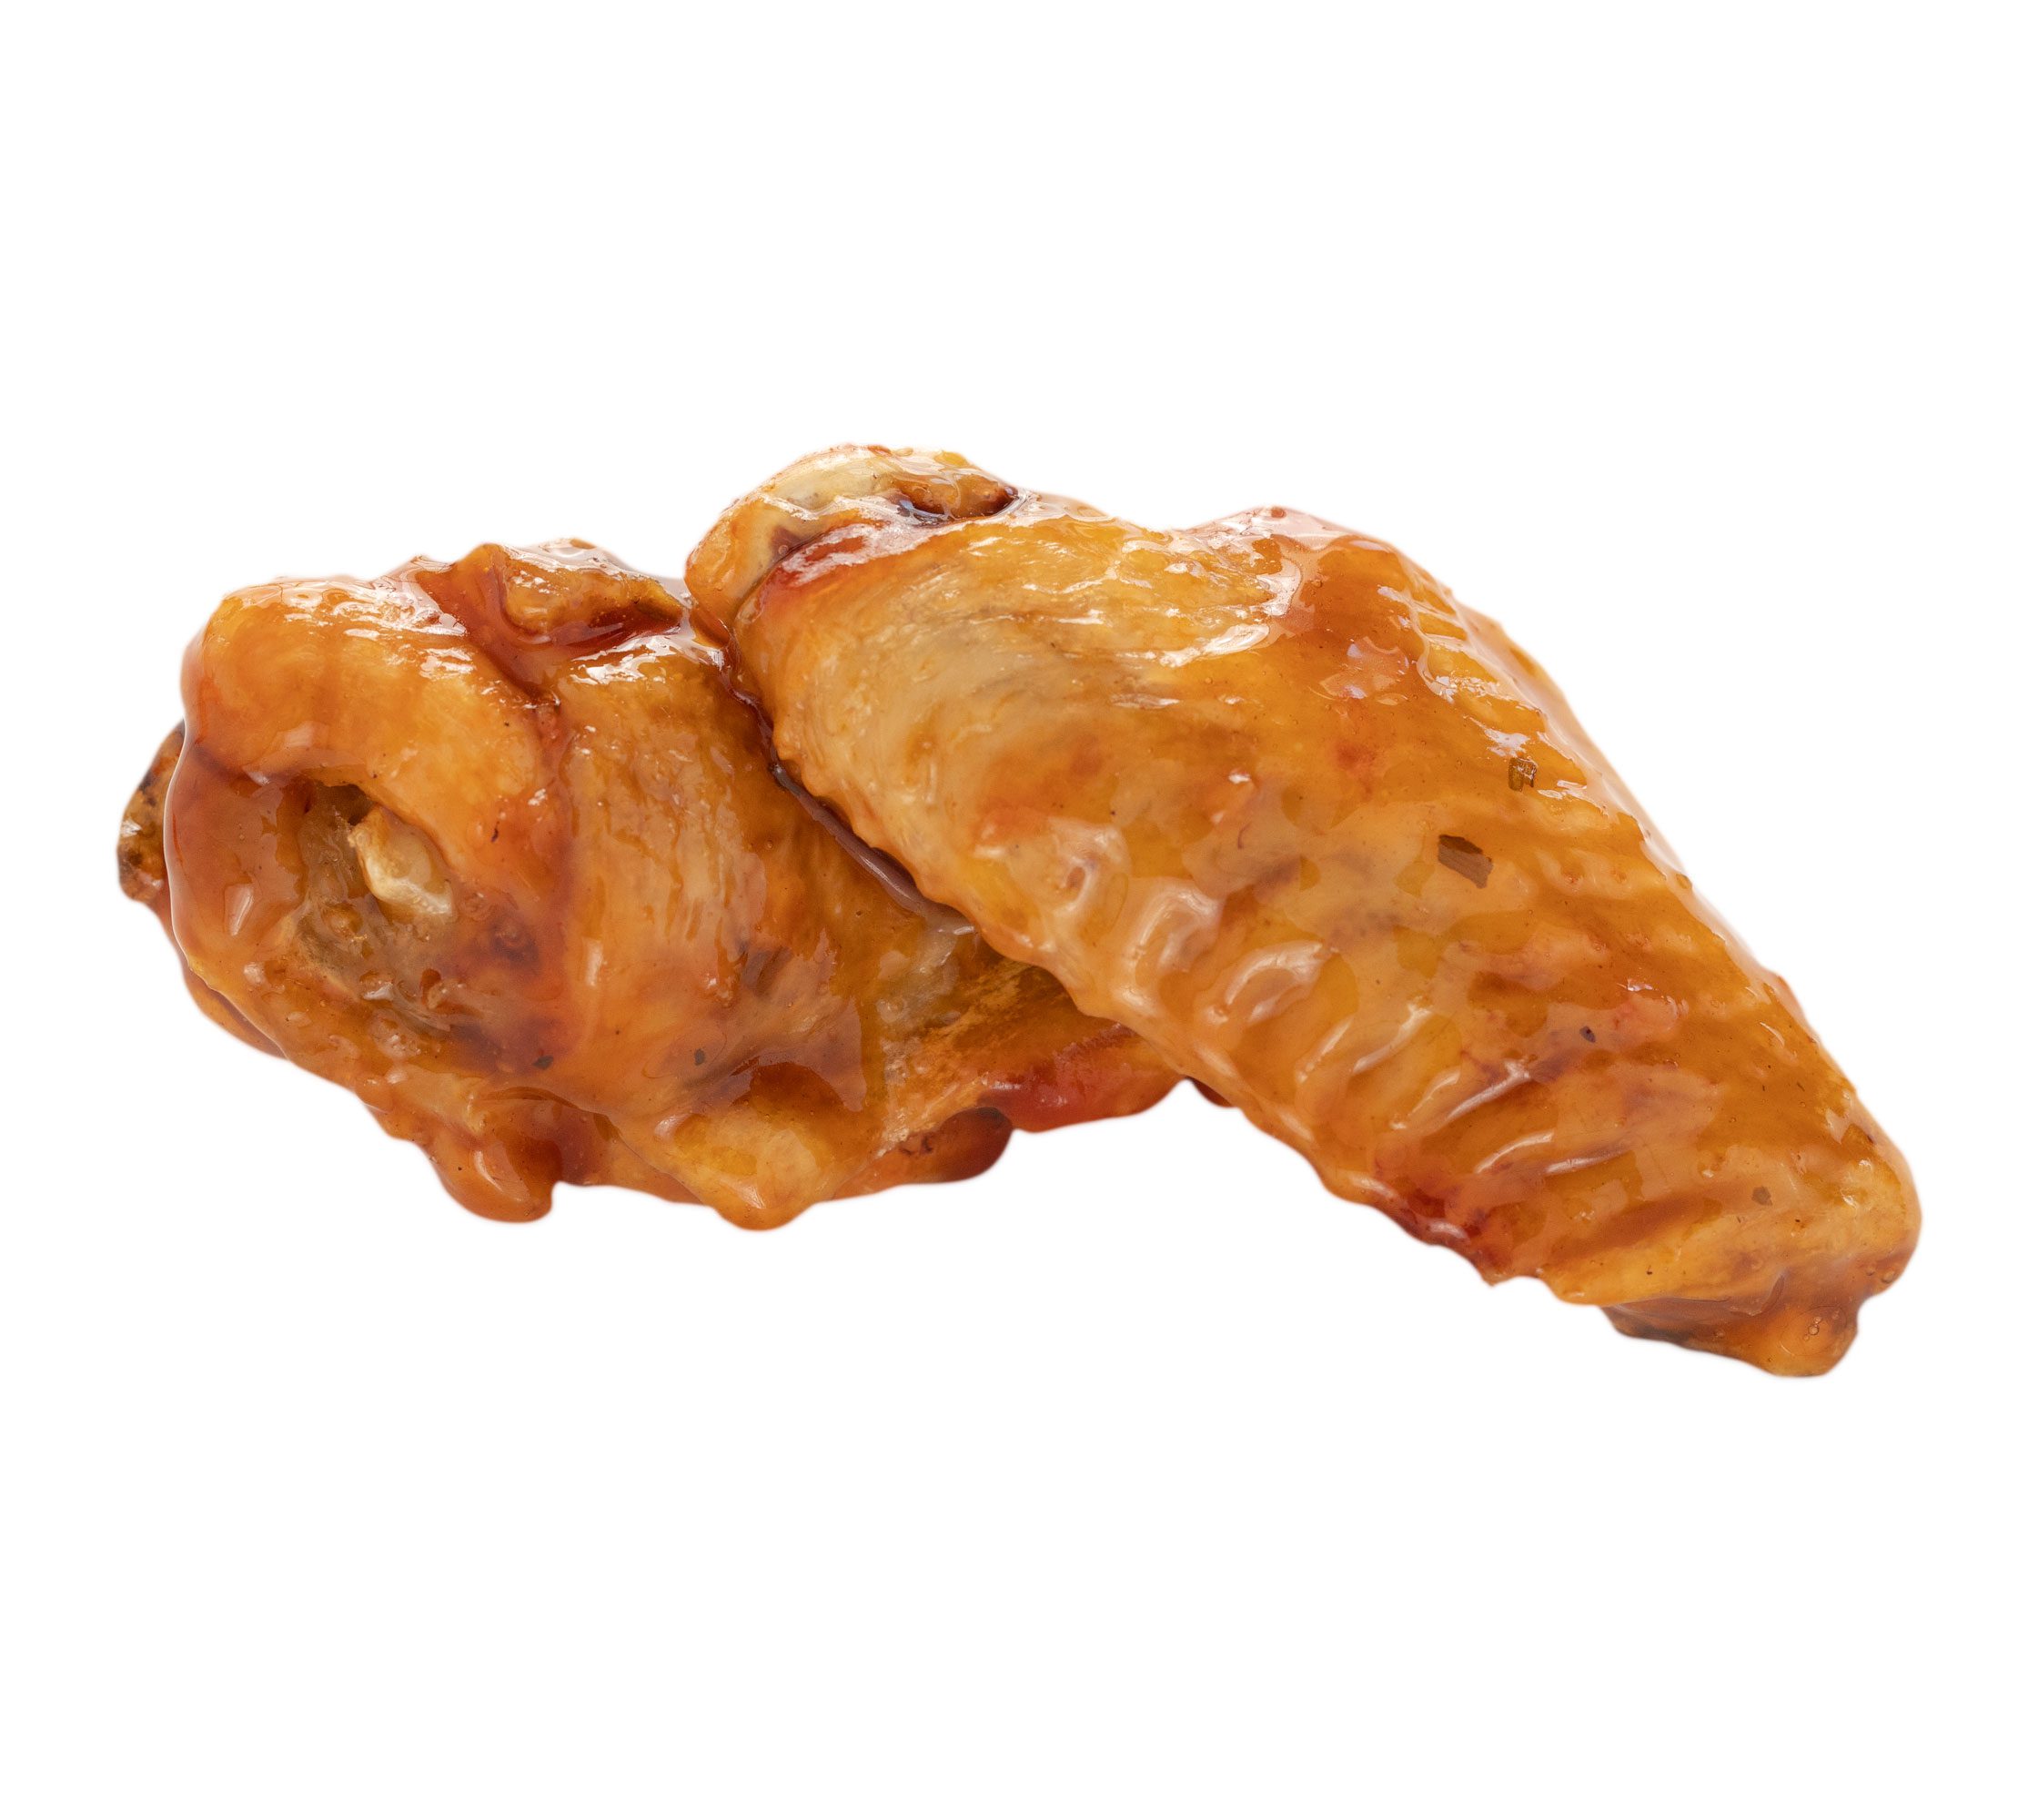 Chicken wing with teriyaki sauce